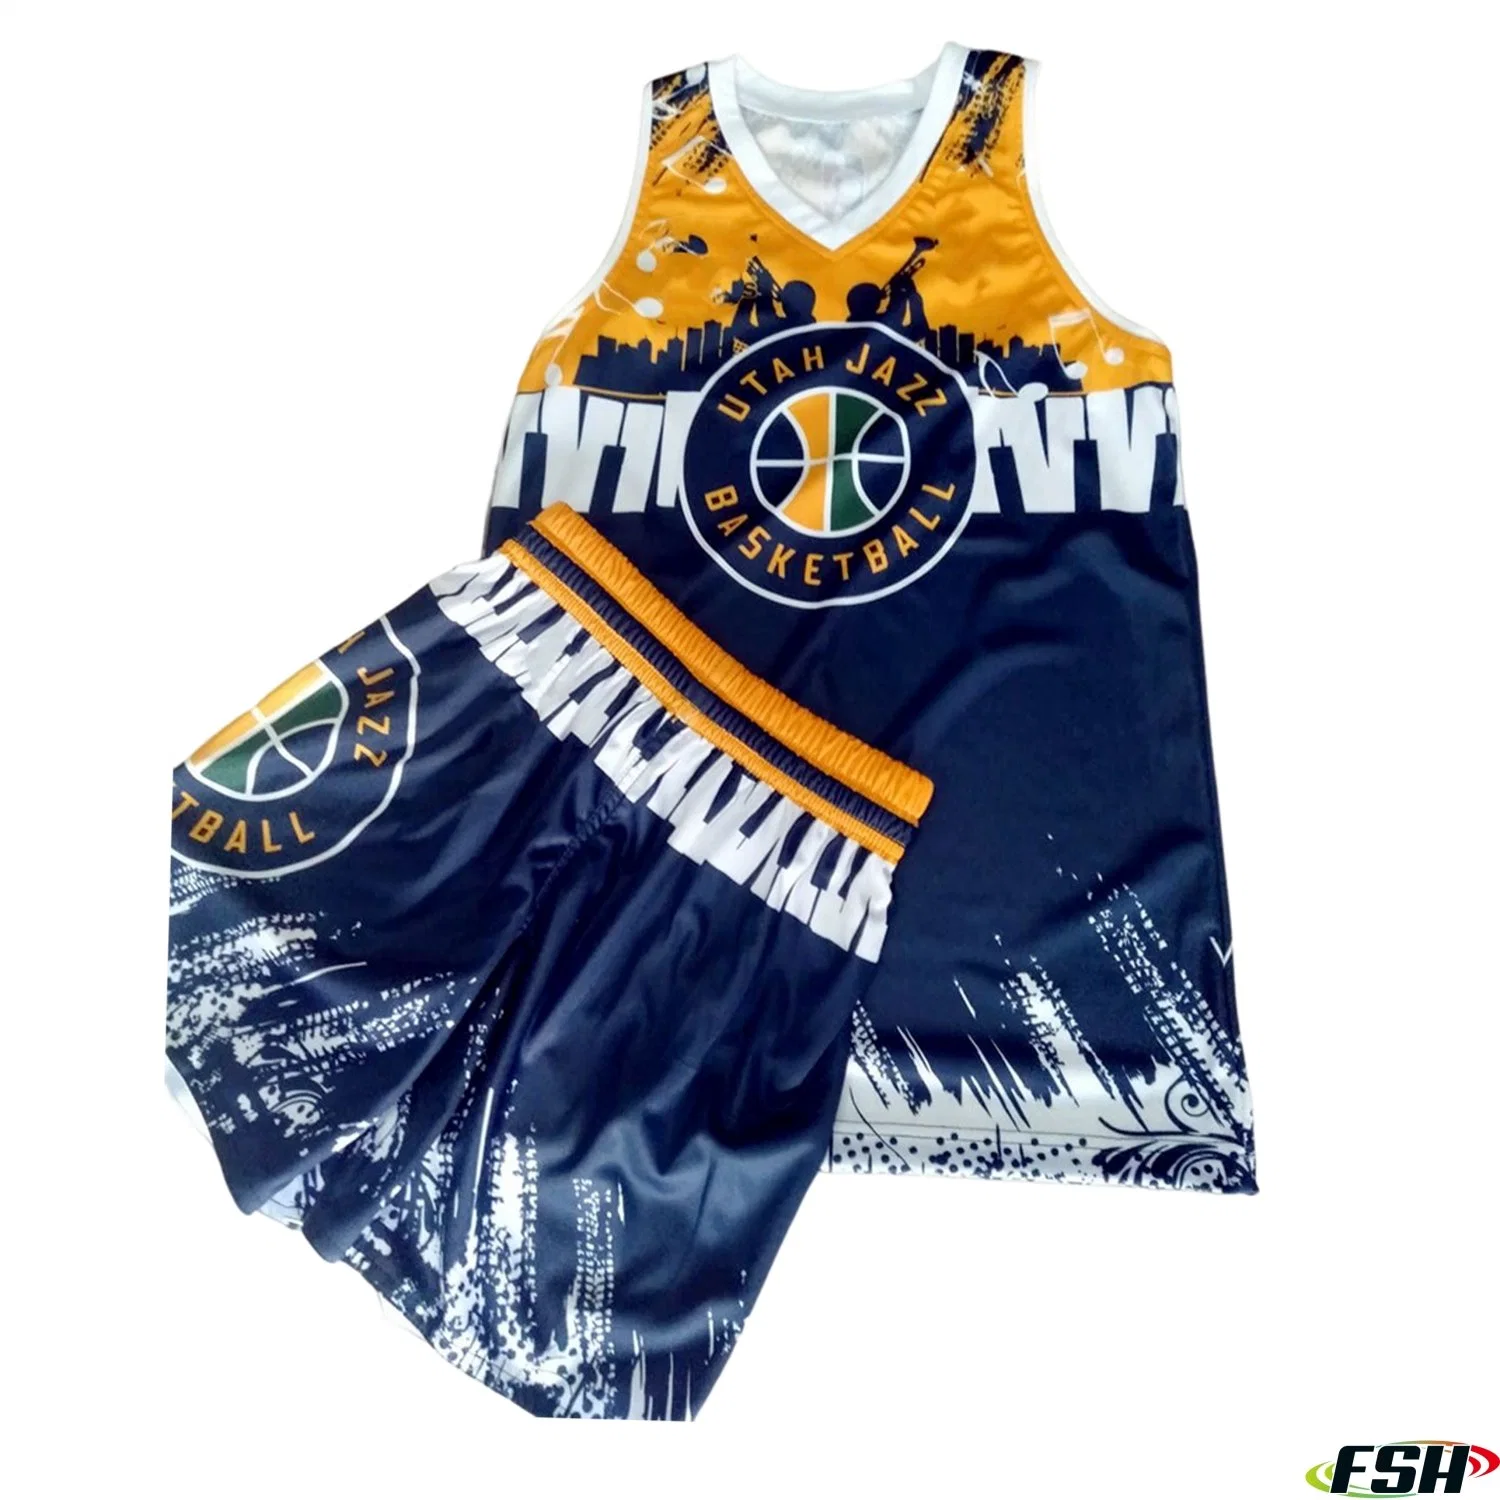 Großhandel/Lieferant Teamwear Unisex Maßgeschneiderte Sublimierte Basketball Jersey Shorts Uniform